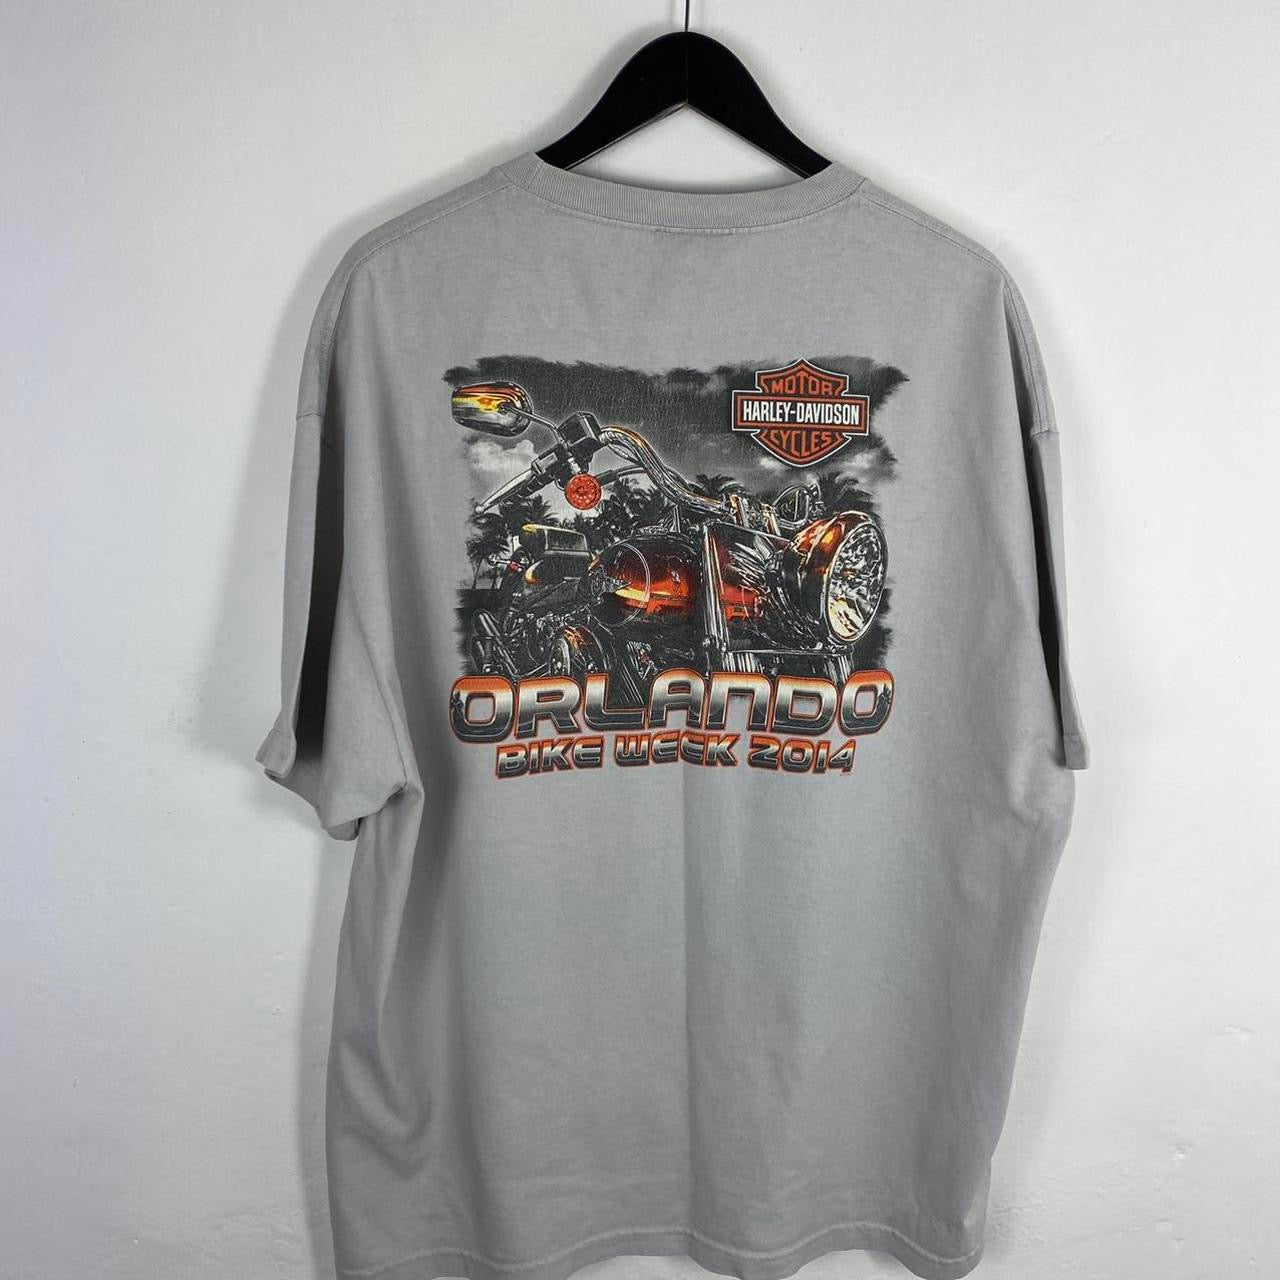 Harley Davidson Orlando t shirt XL